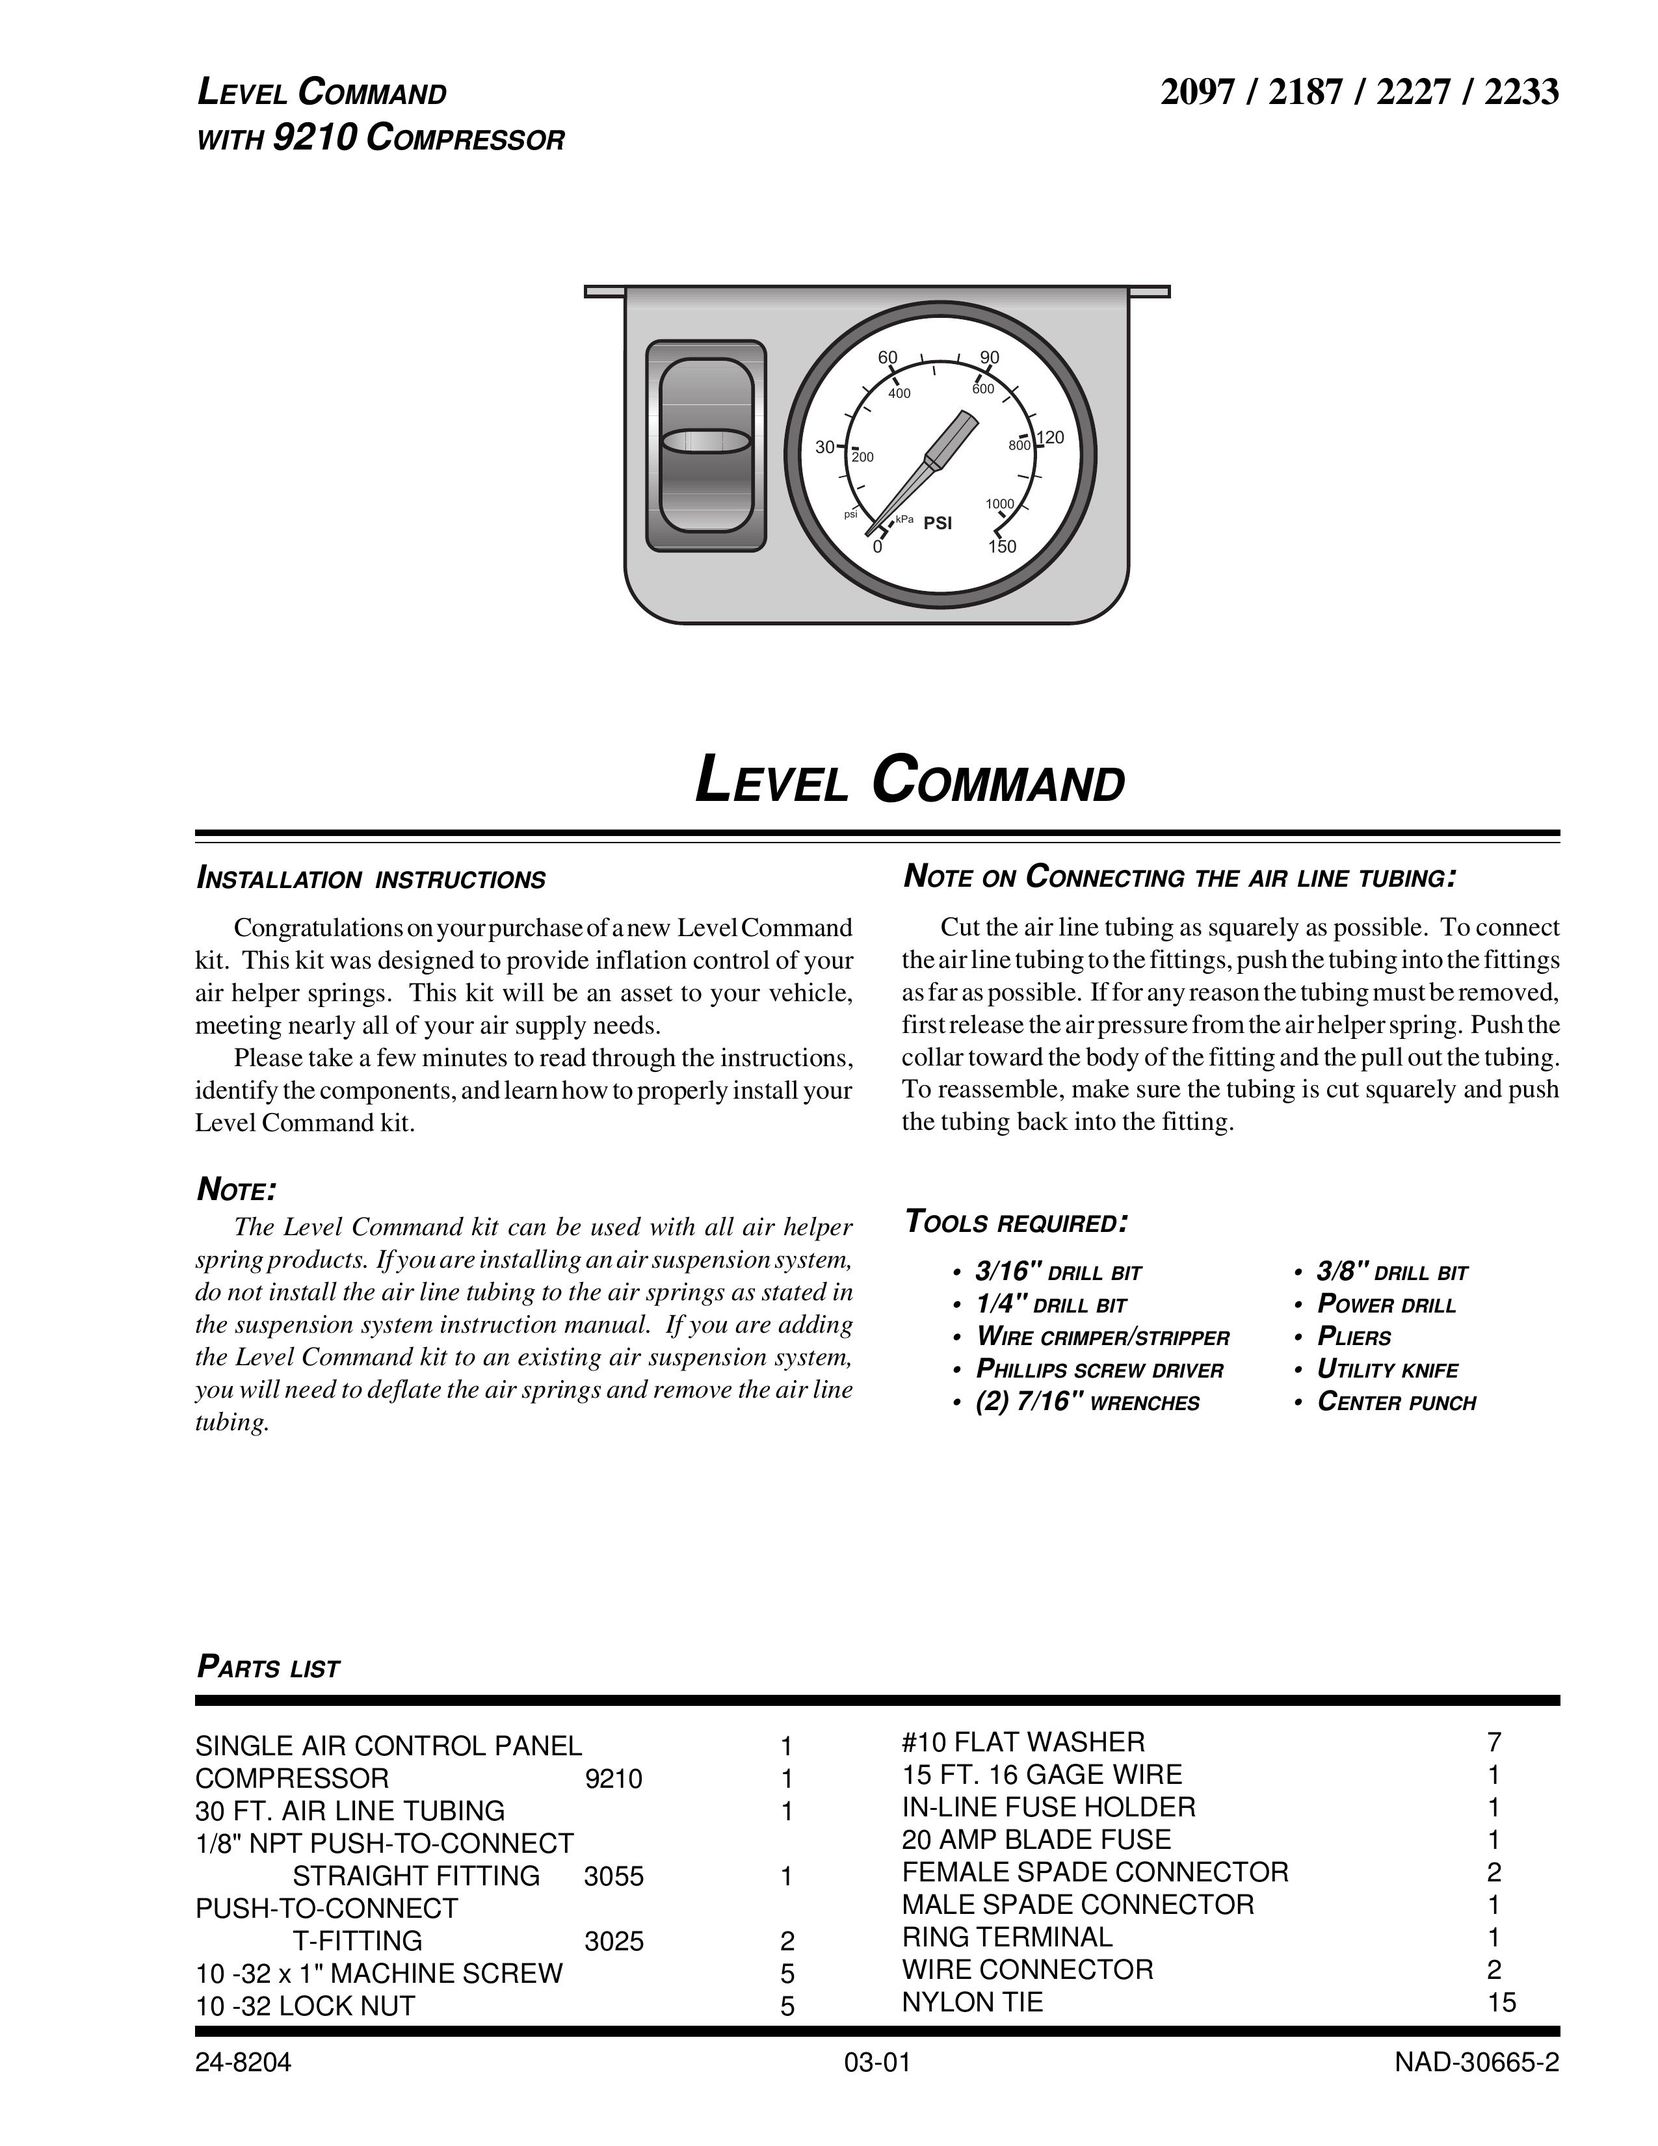 Black & Decker 2227 Air Compressor User Manual